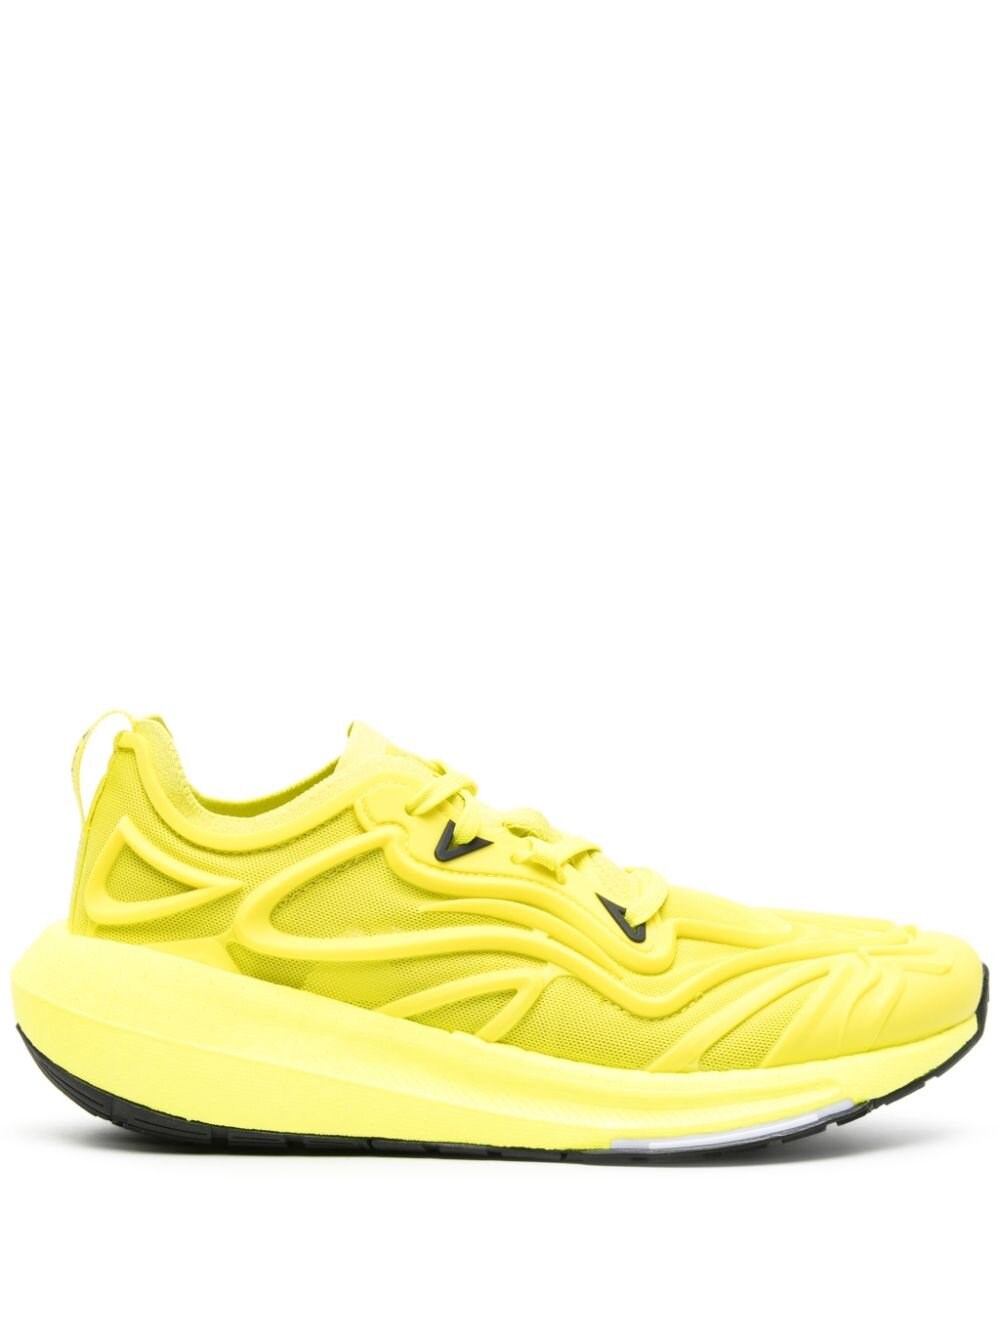 Adidas By Stella Mccartney Ultraboost Speed Running Sneakers In Yellow